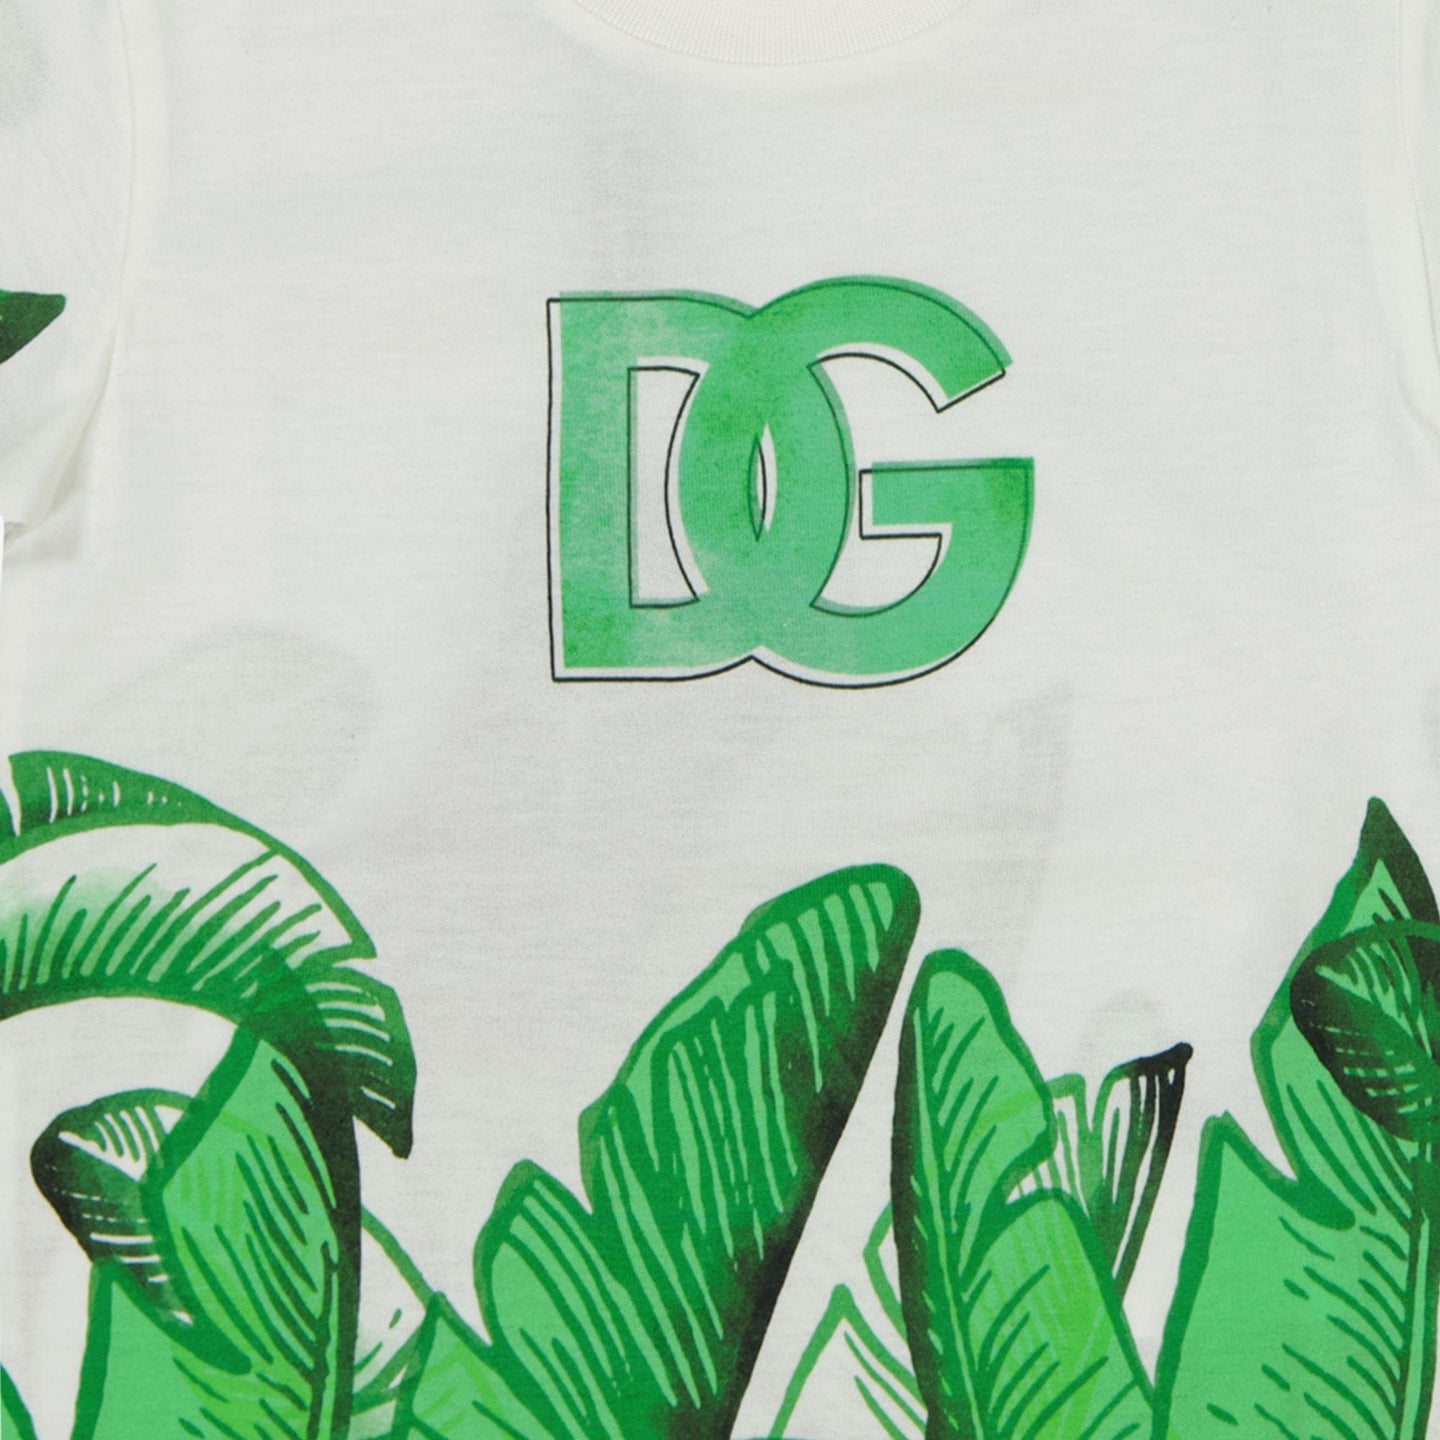 Dolce & Gabbana Baby Jongens T-Shirt Wit 3/6